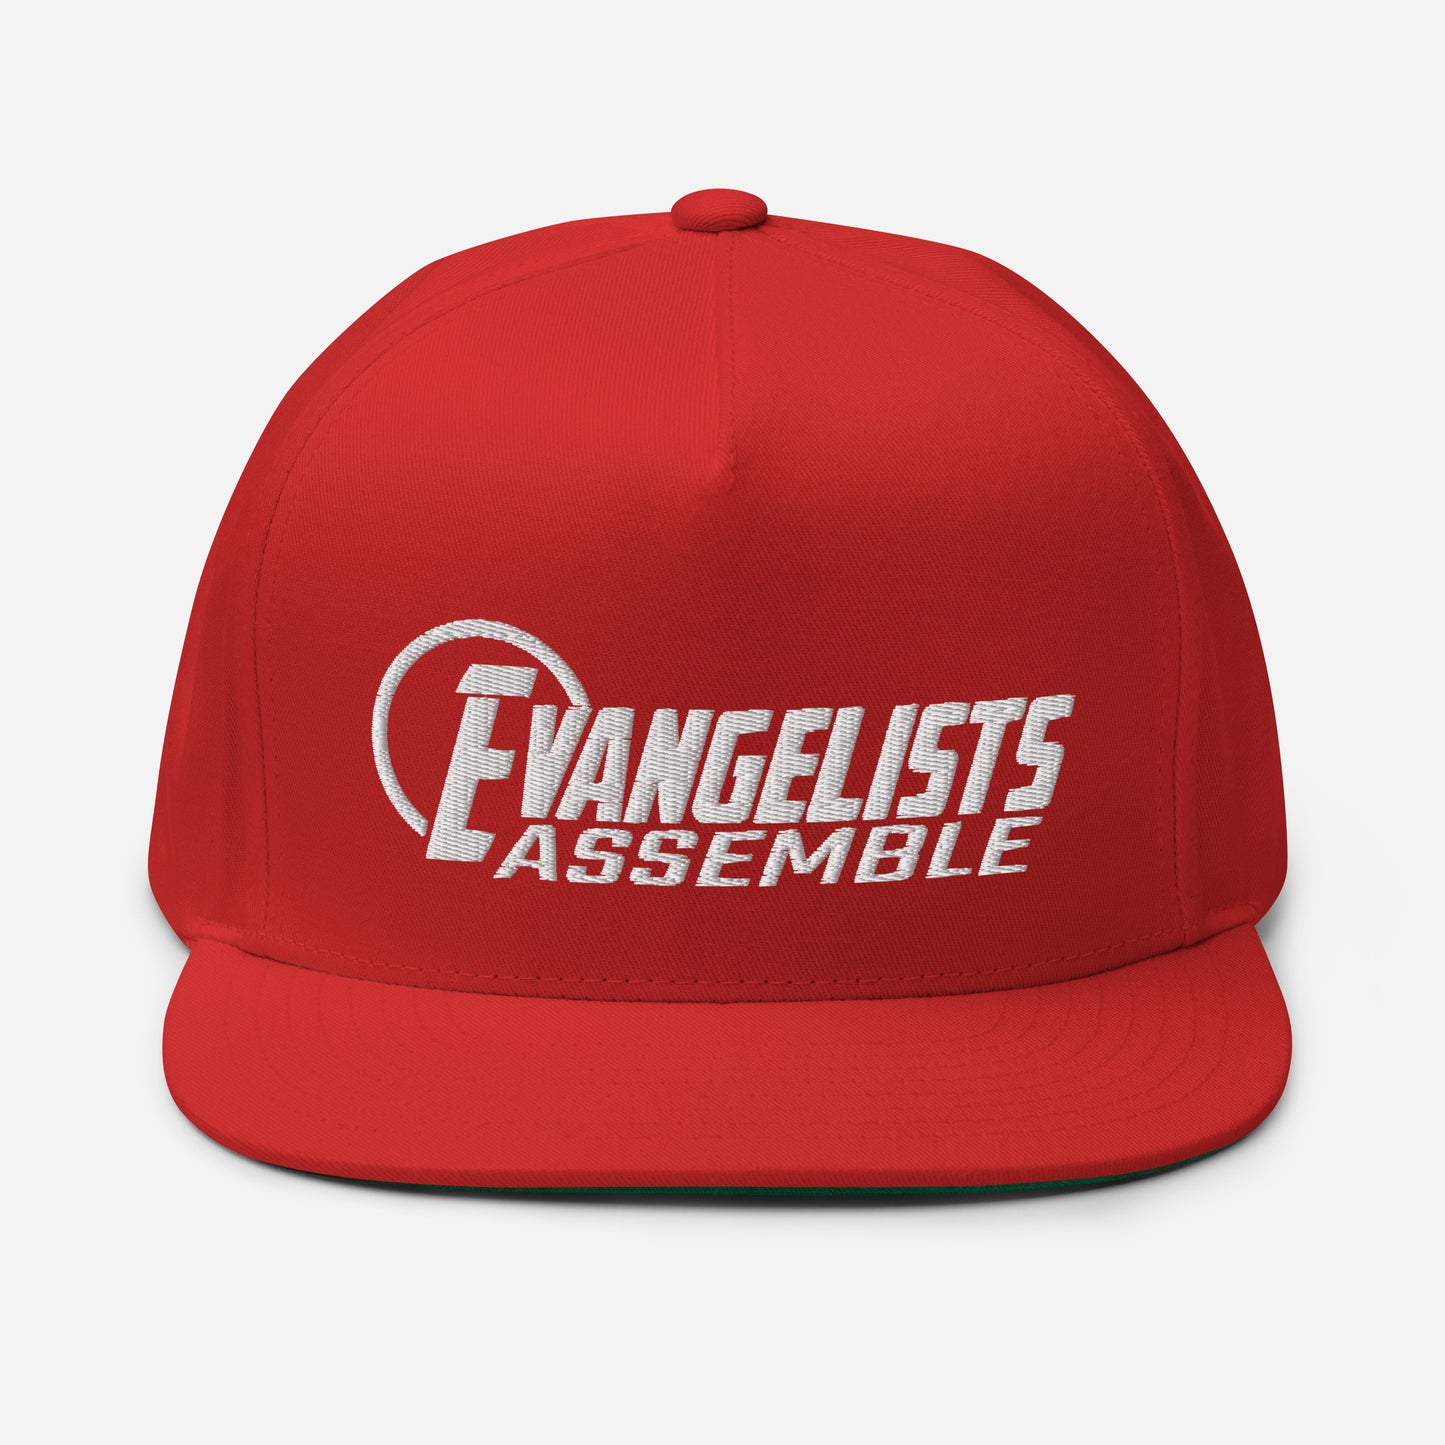 Evangelists Assemble Flat Bill Cap